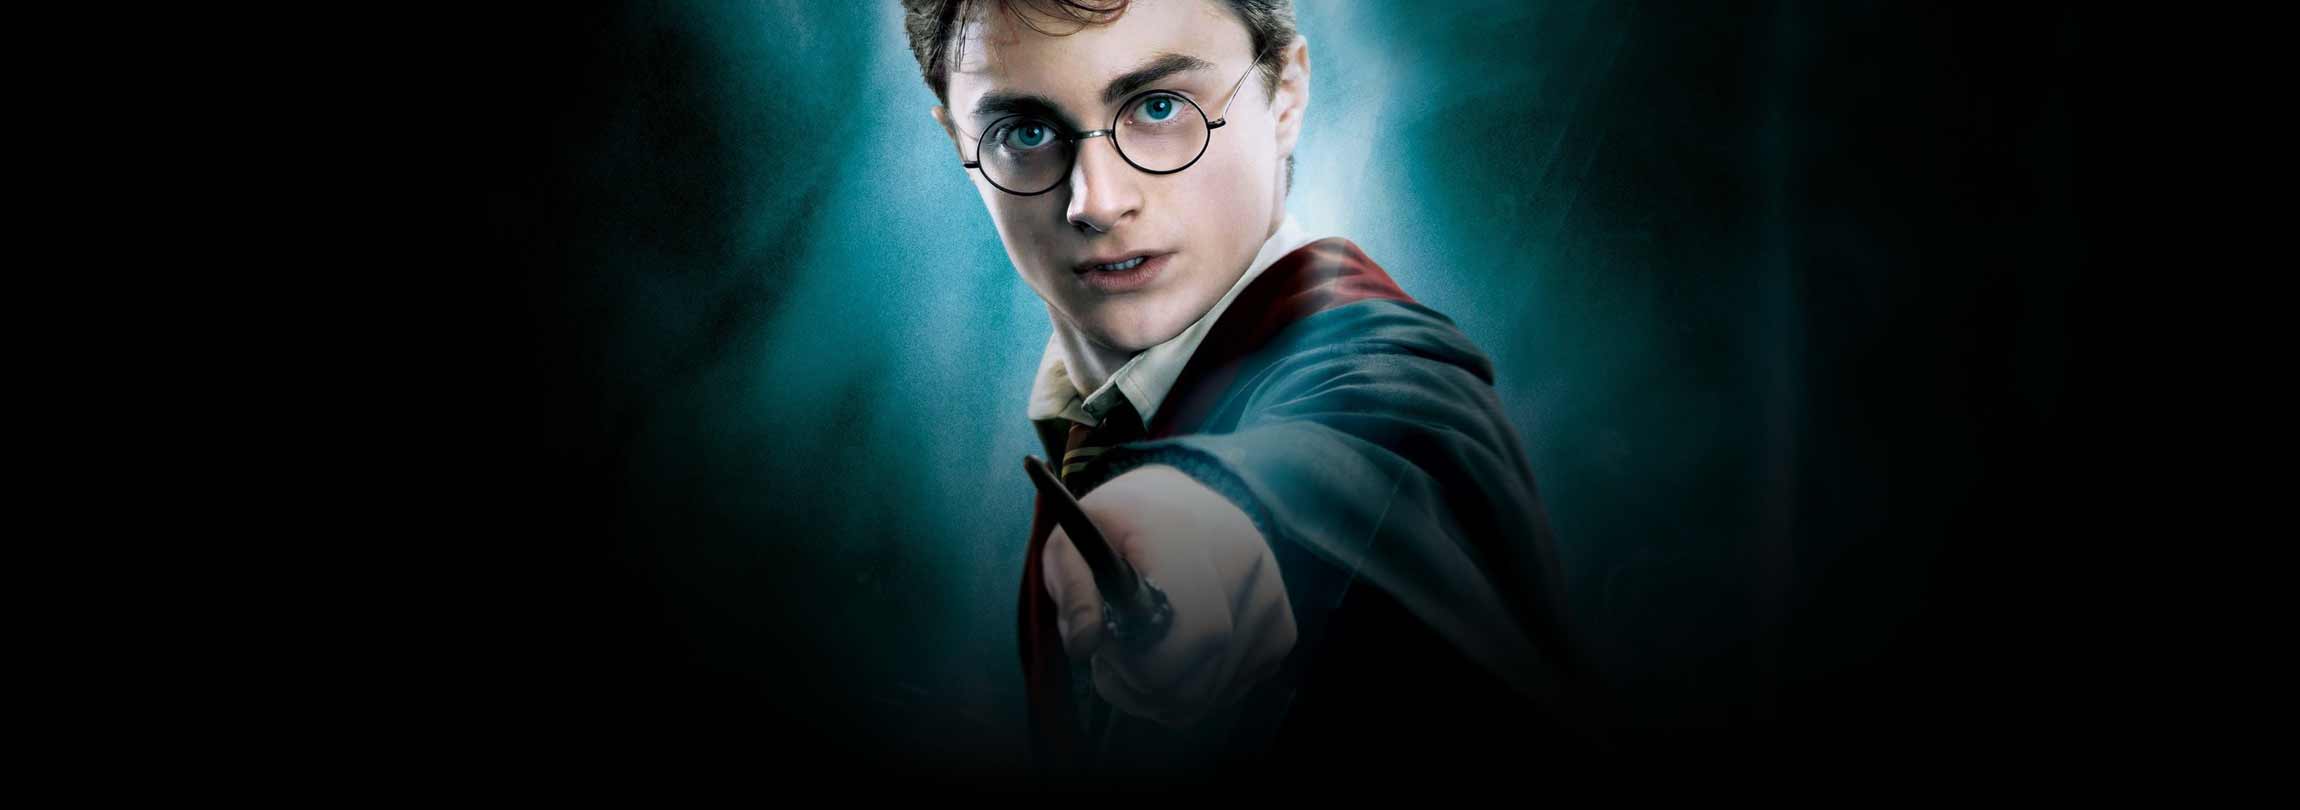 “Harry Potter me converteu”